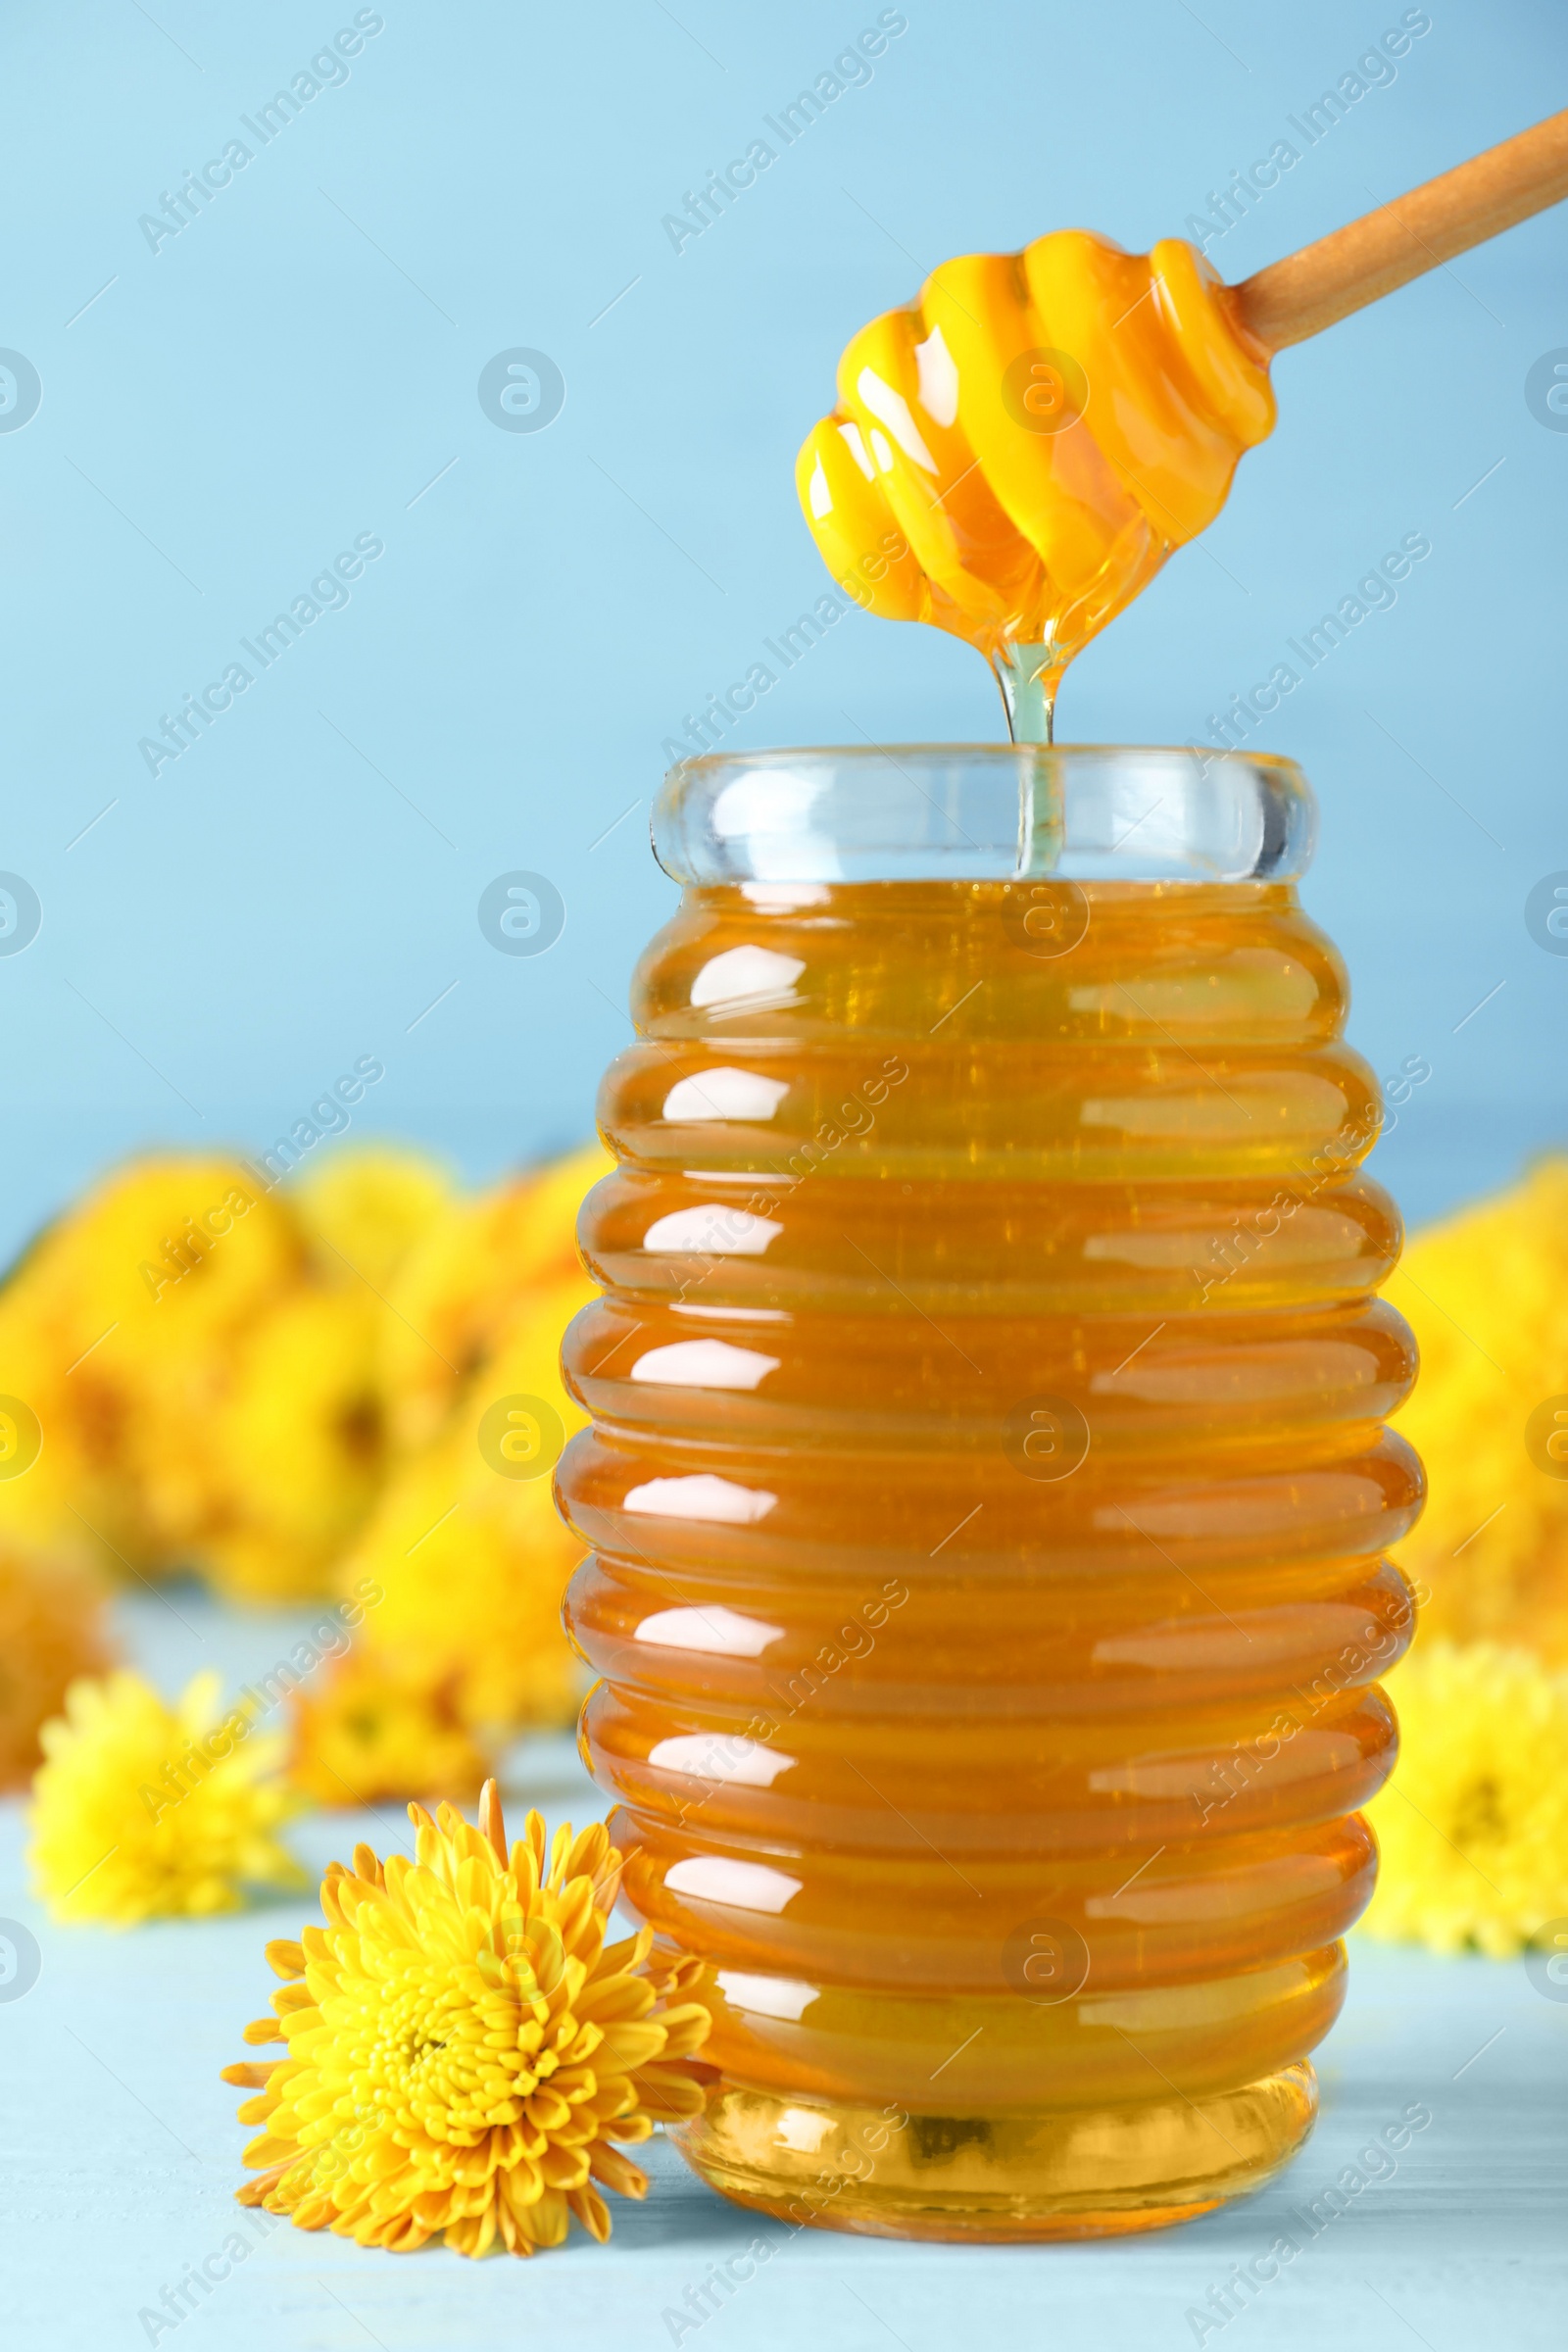 Photo of Tasty honey and chrysanthemum flowers on light blue table